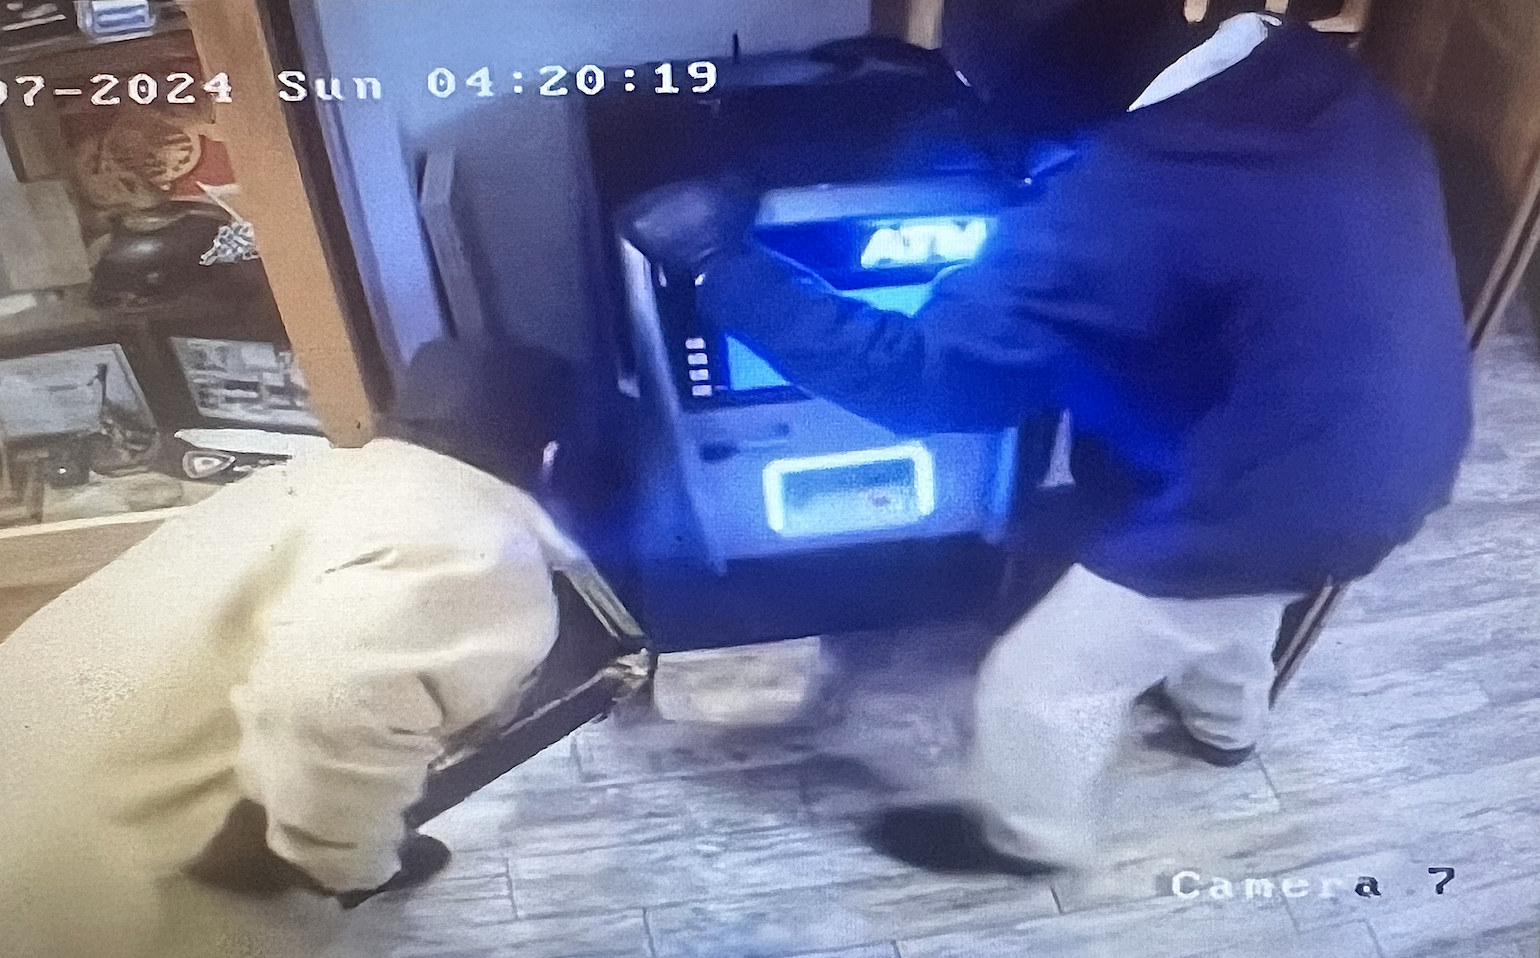 VIDEO: Thieves heist ATM machine from Folsom Veterans Hall